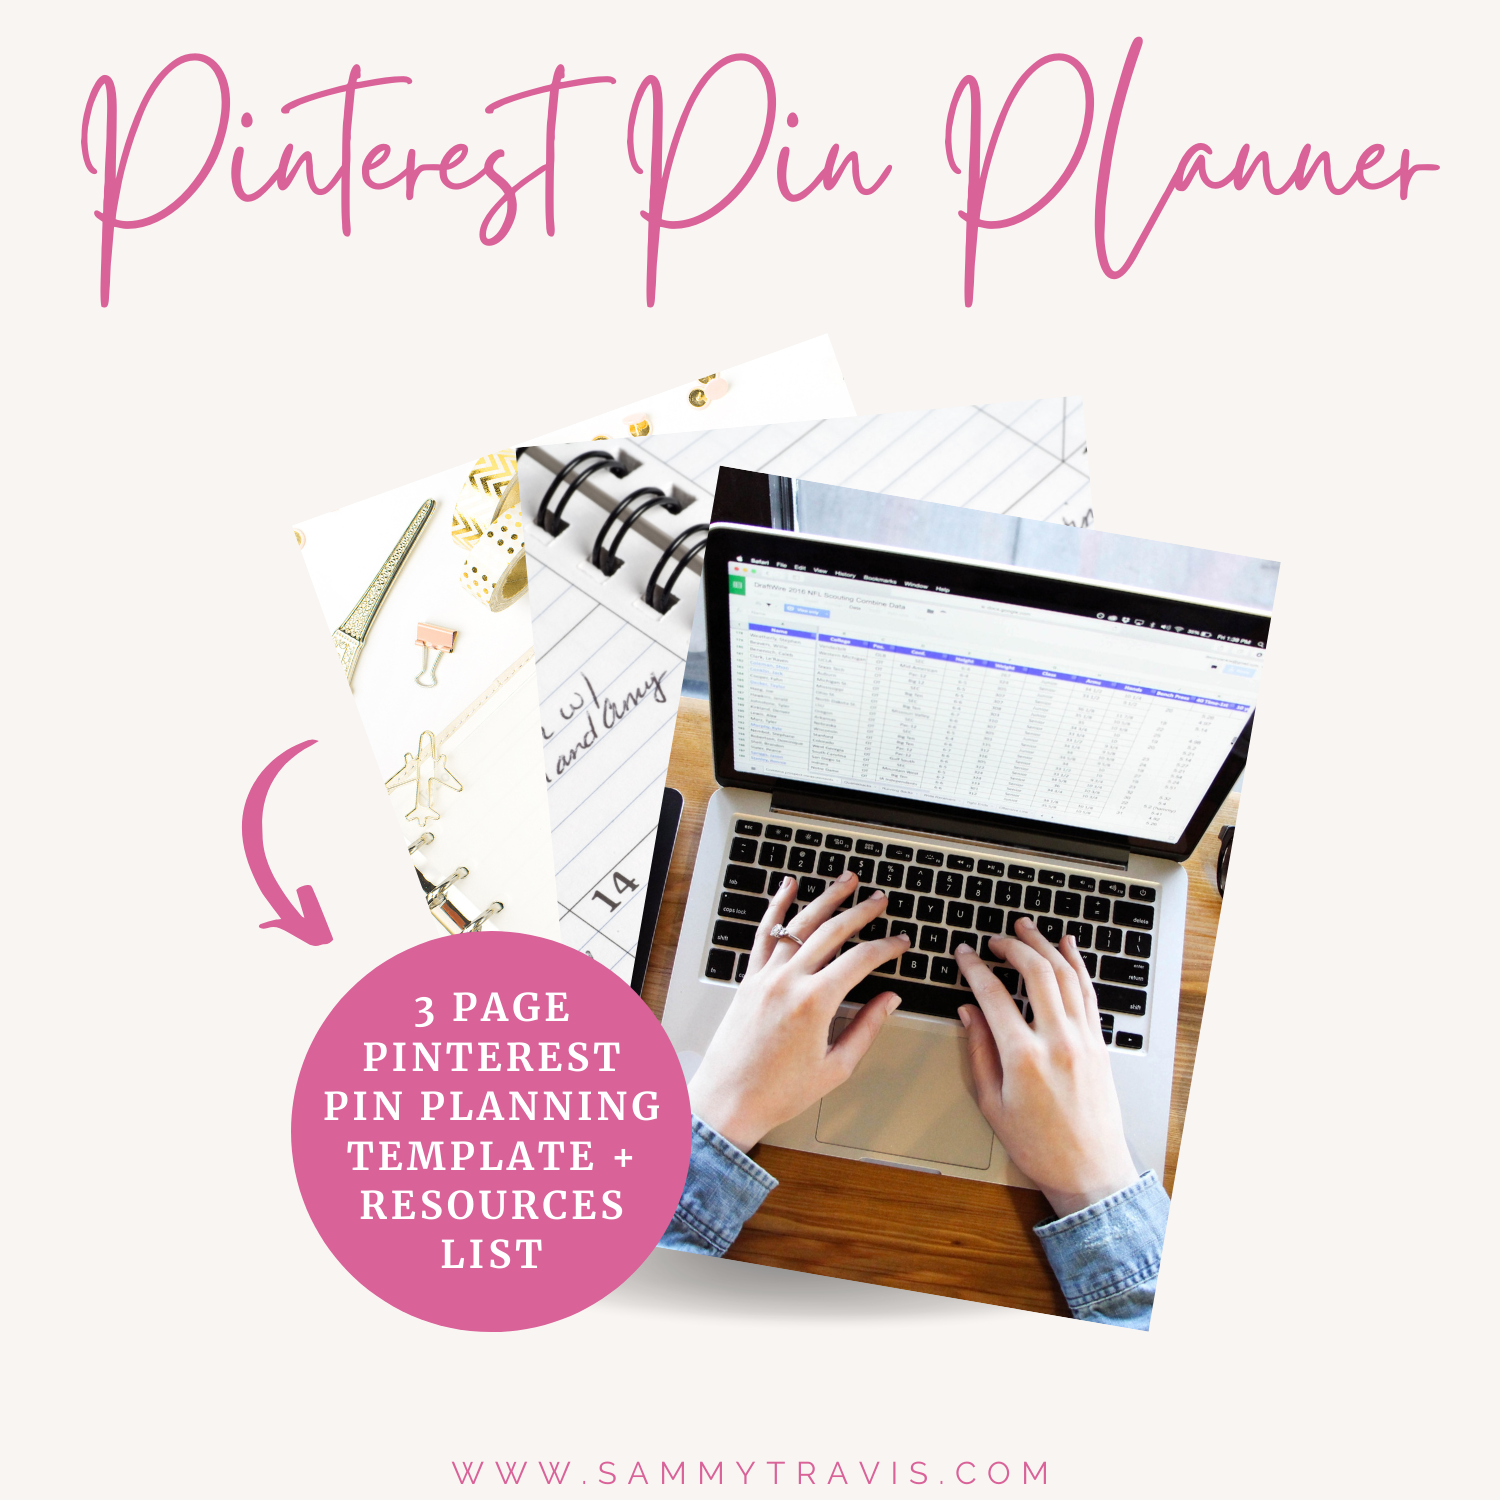 Pinterest pin planner, free download